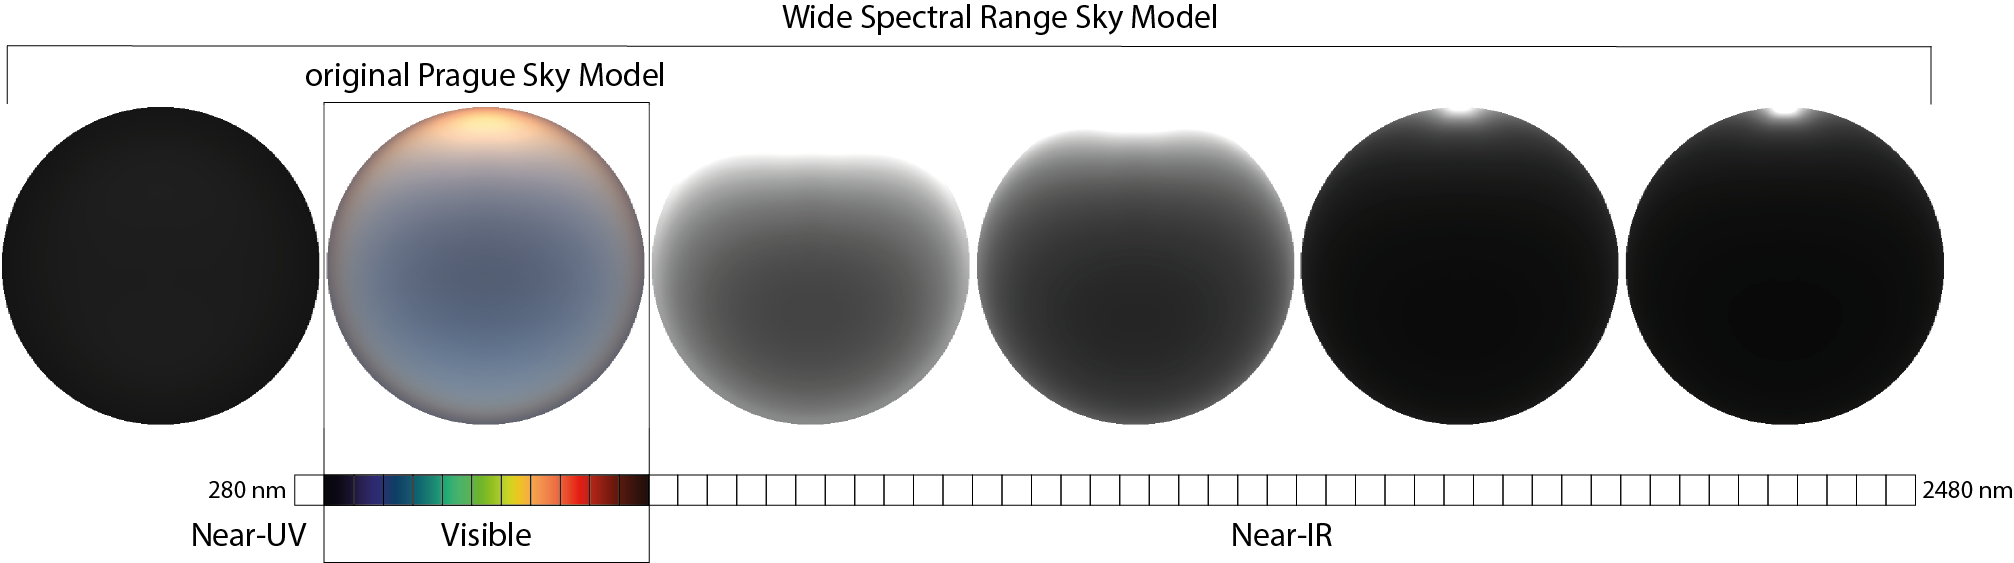 A comparison of our Wide Spectral Range Sky Radiance Model with the original Prague Sky Model